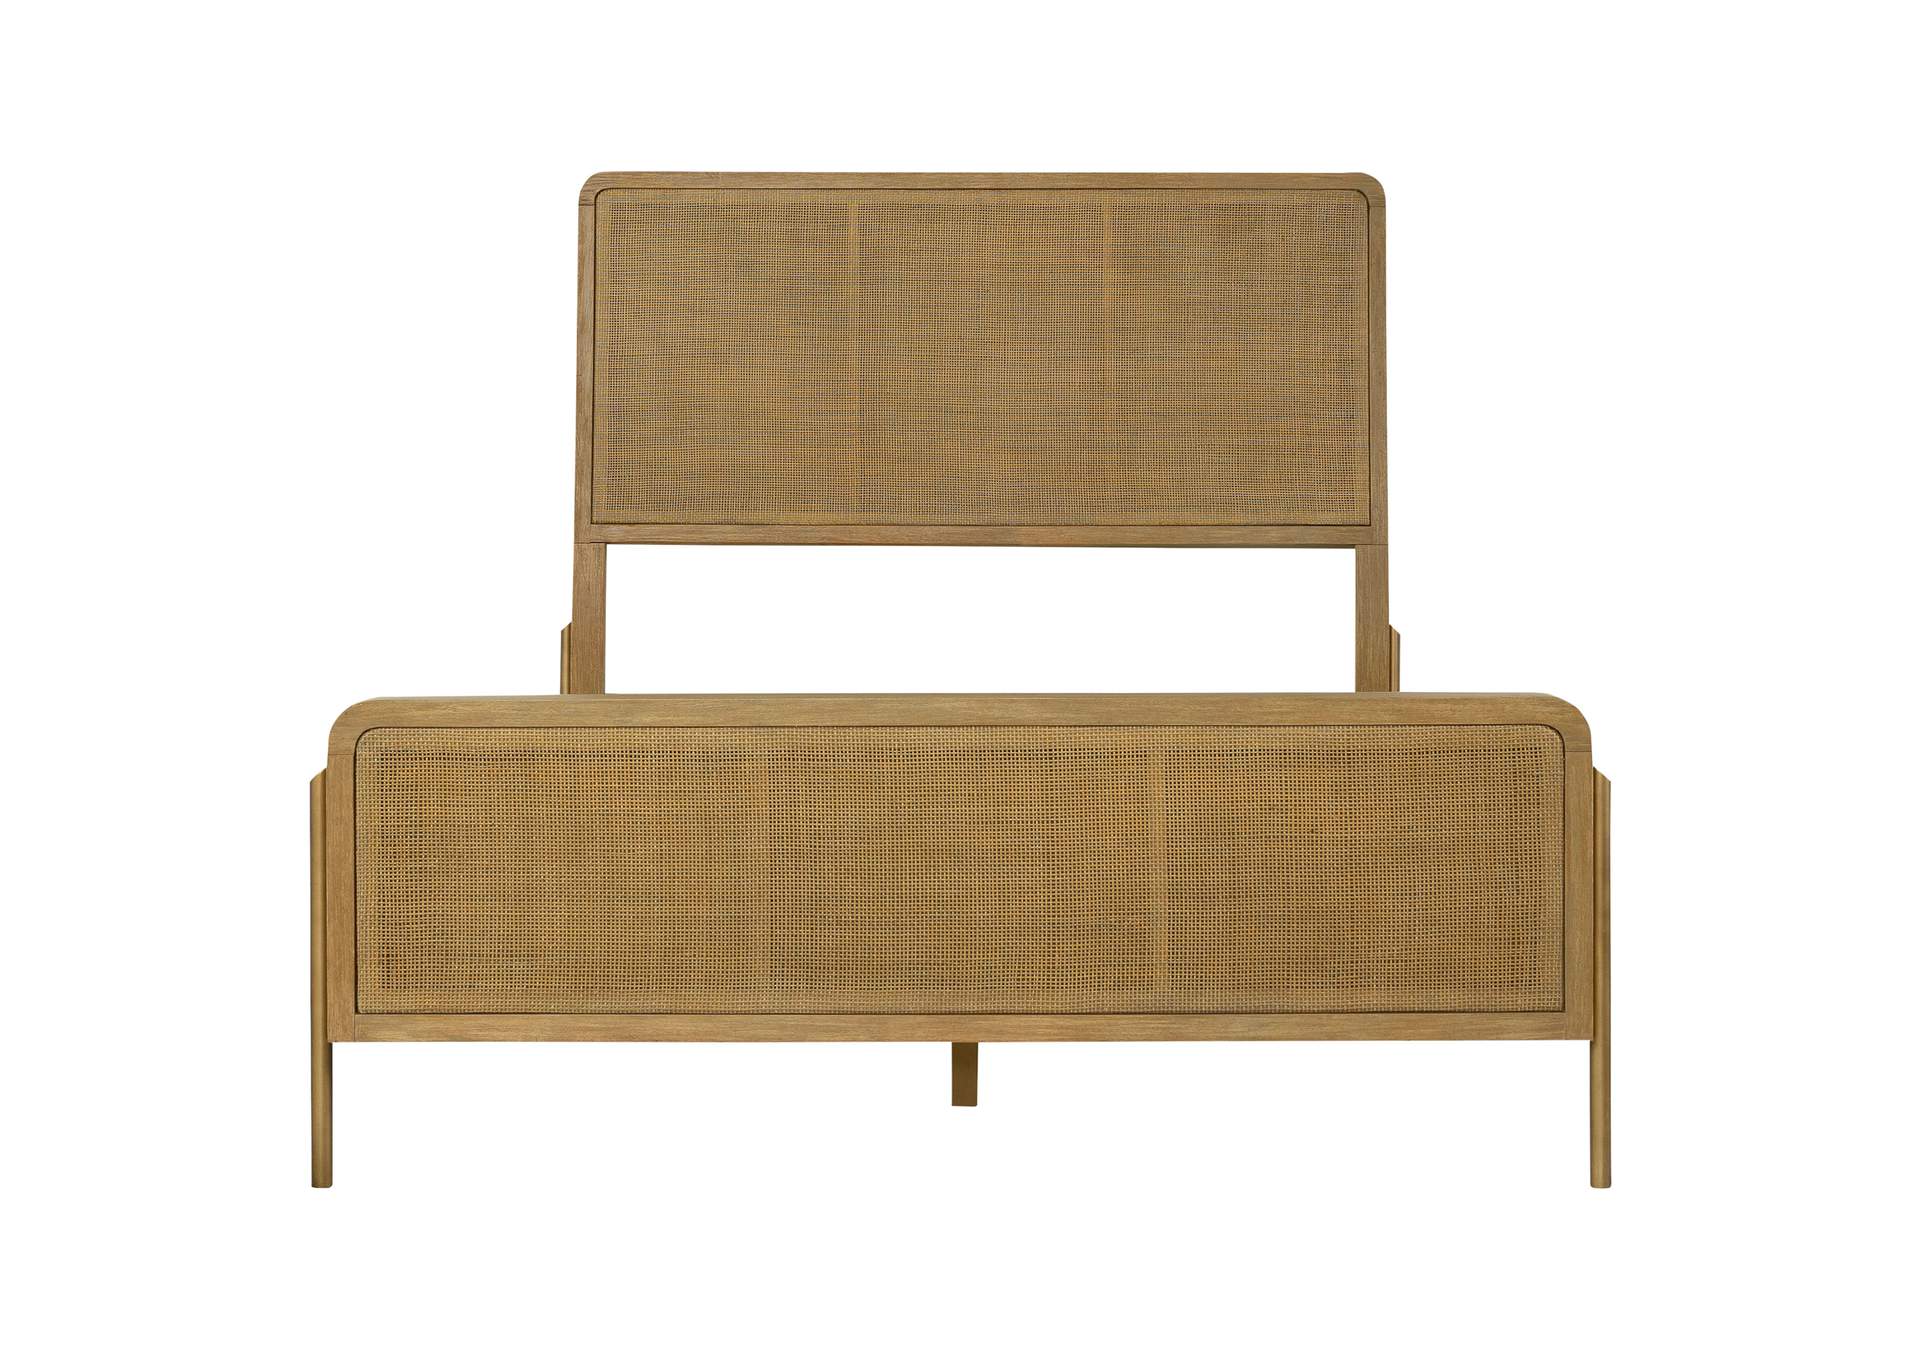 Arini 5-piece Upholstered Eastern King Bedroom Set Sand Wash,Coaster Furniture